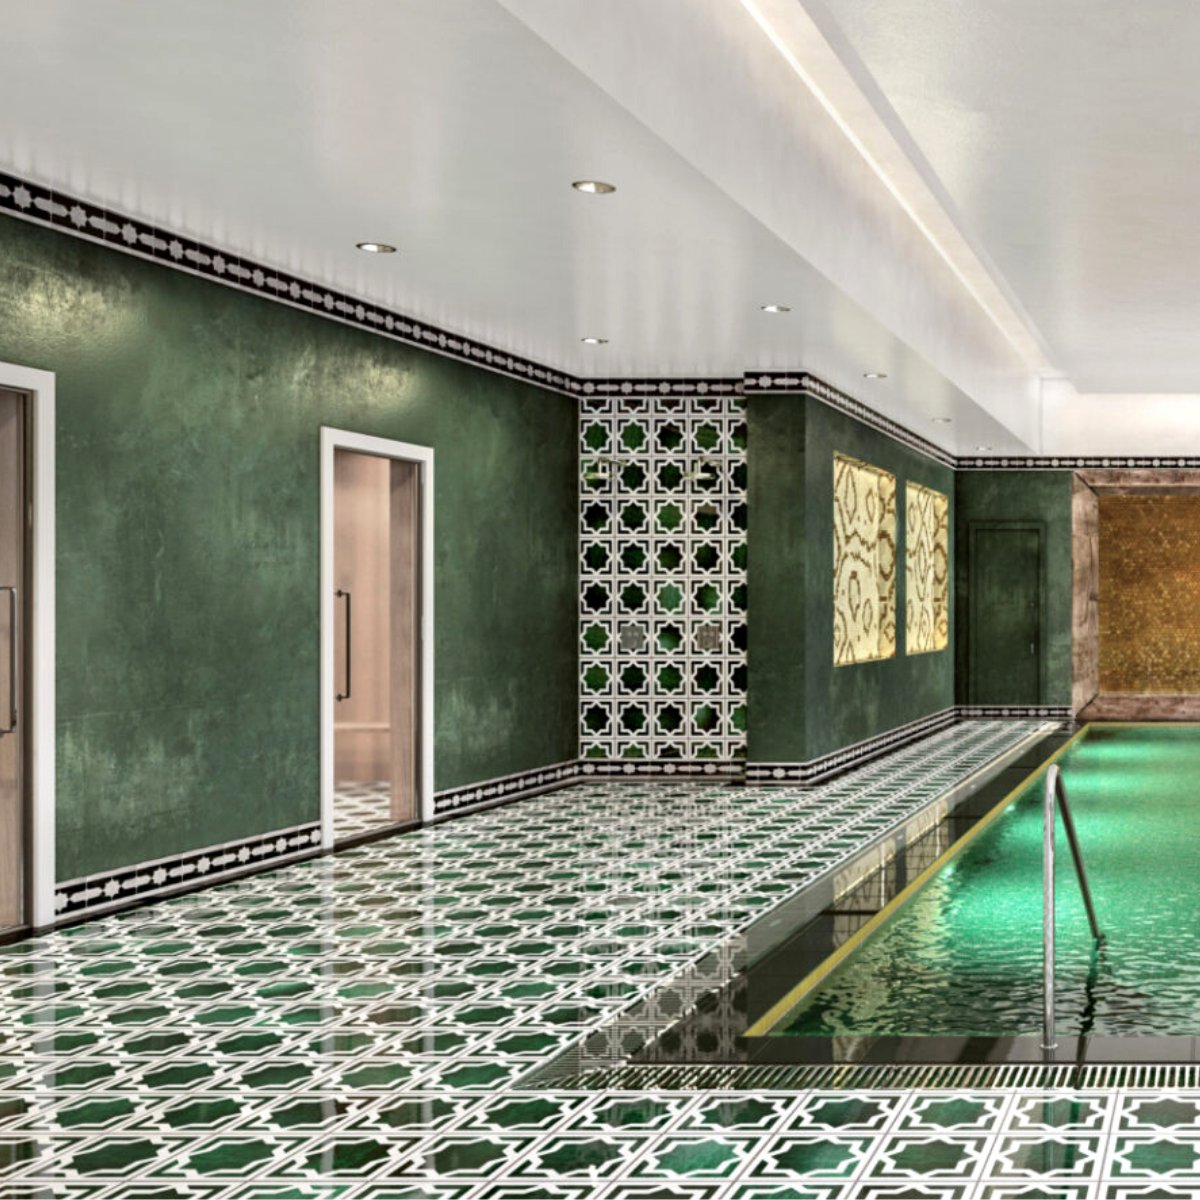 Green Polished Plaster at the Pool 😍

#polishedplaster
#polishedconcrete
#interiordesign
#luxuriousinterior
#sevenoaks
#projectthrowback